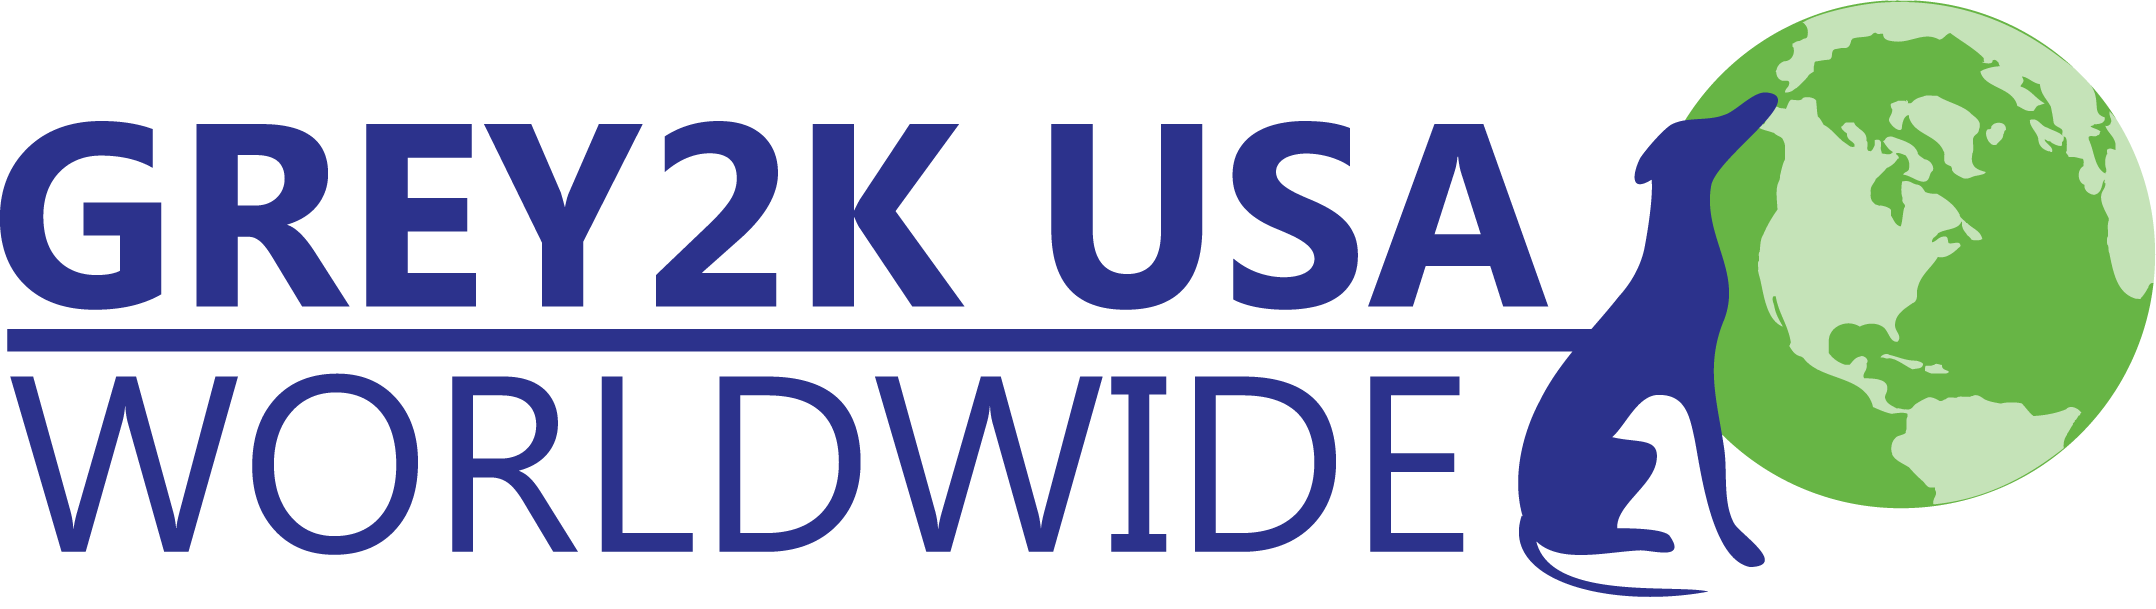 GREY2K USA Worldwide logo